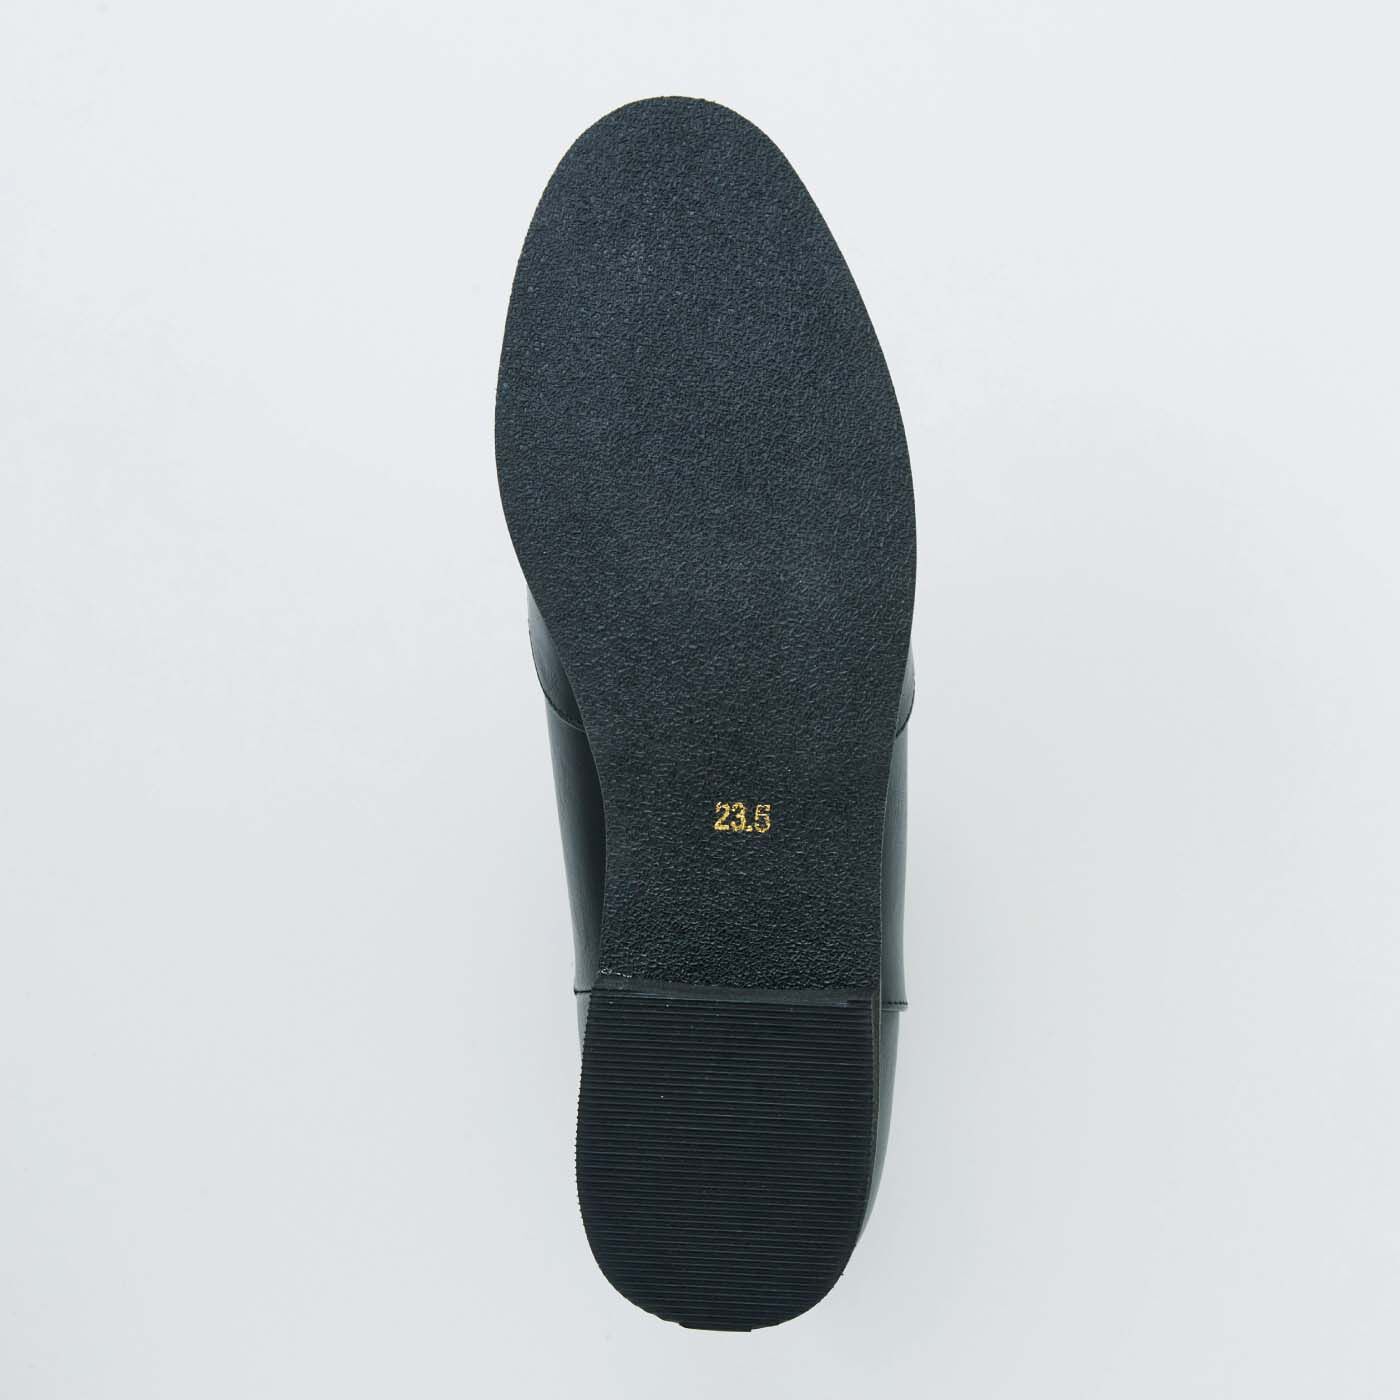 el:ment|el:ment　伝統を愉（たの）しむウィングチップ 側面ゴムで脱ぎ履きしやすい 晴雨兼用シューズ〈ブラック〉|SOLE